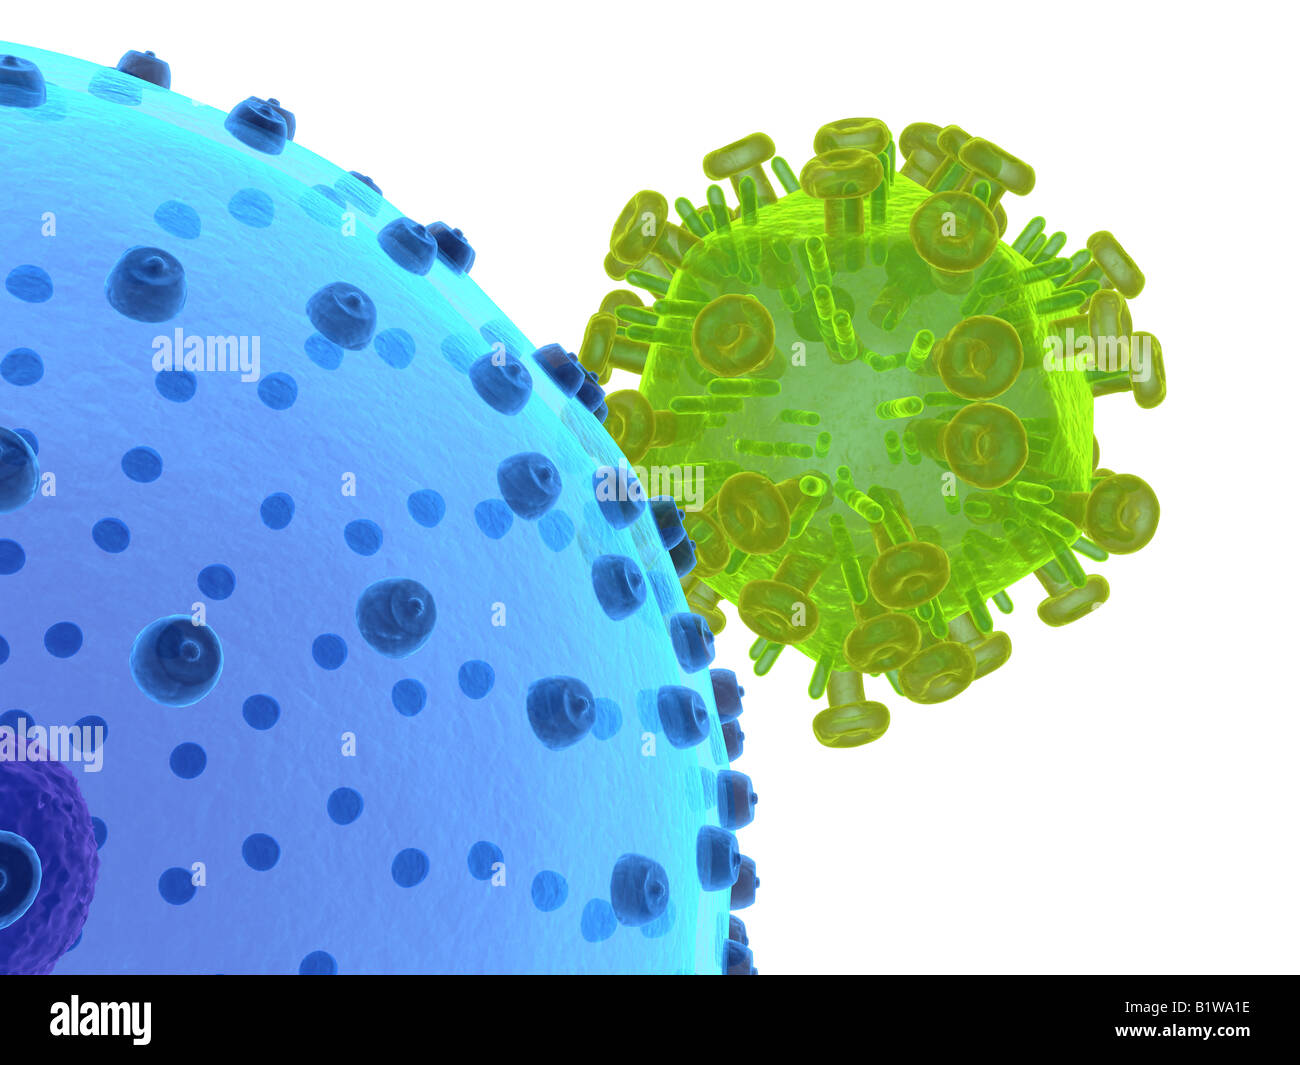 hi virus infecting cell Stock Photo